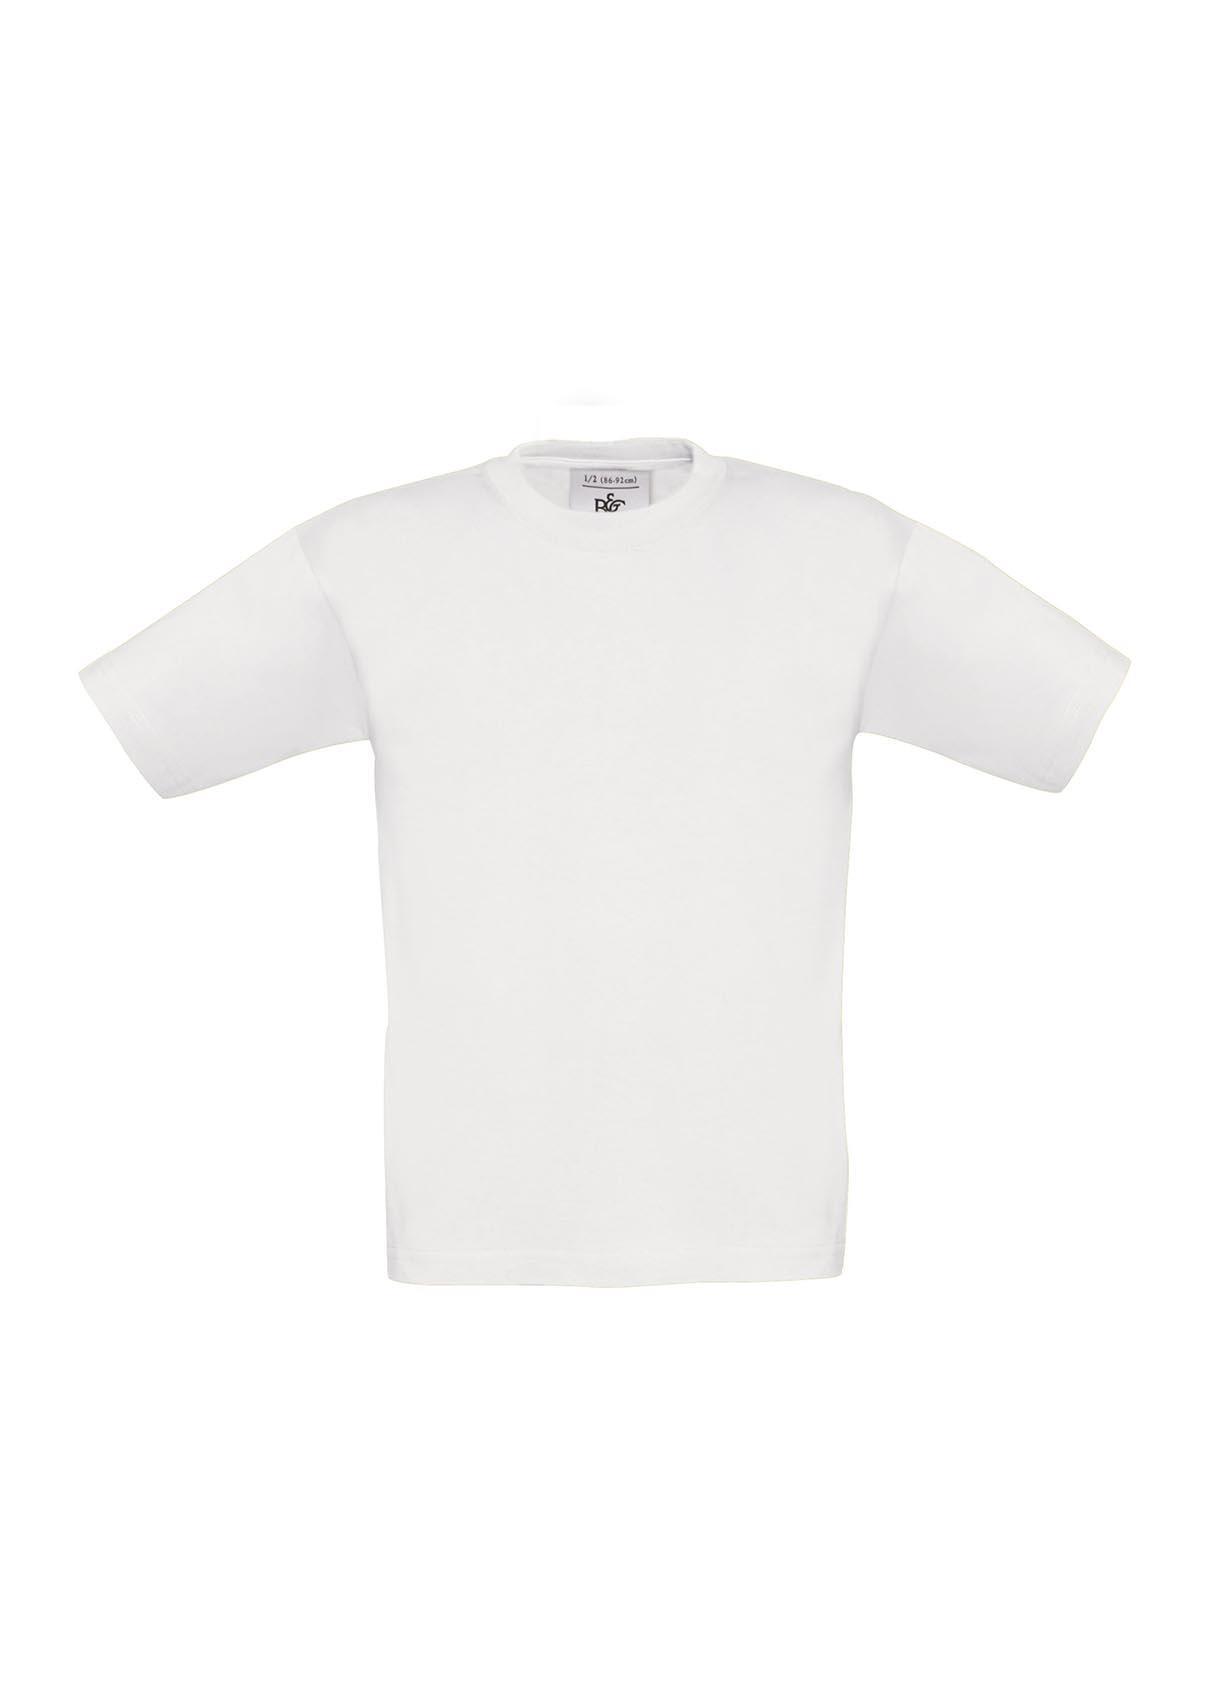 T-shirt voor kids wit kinder shirt